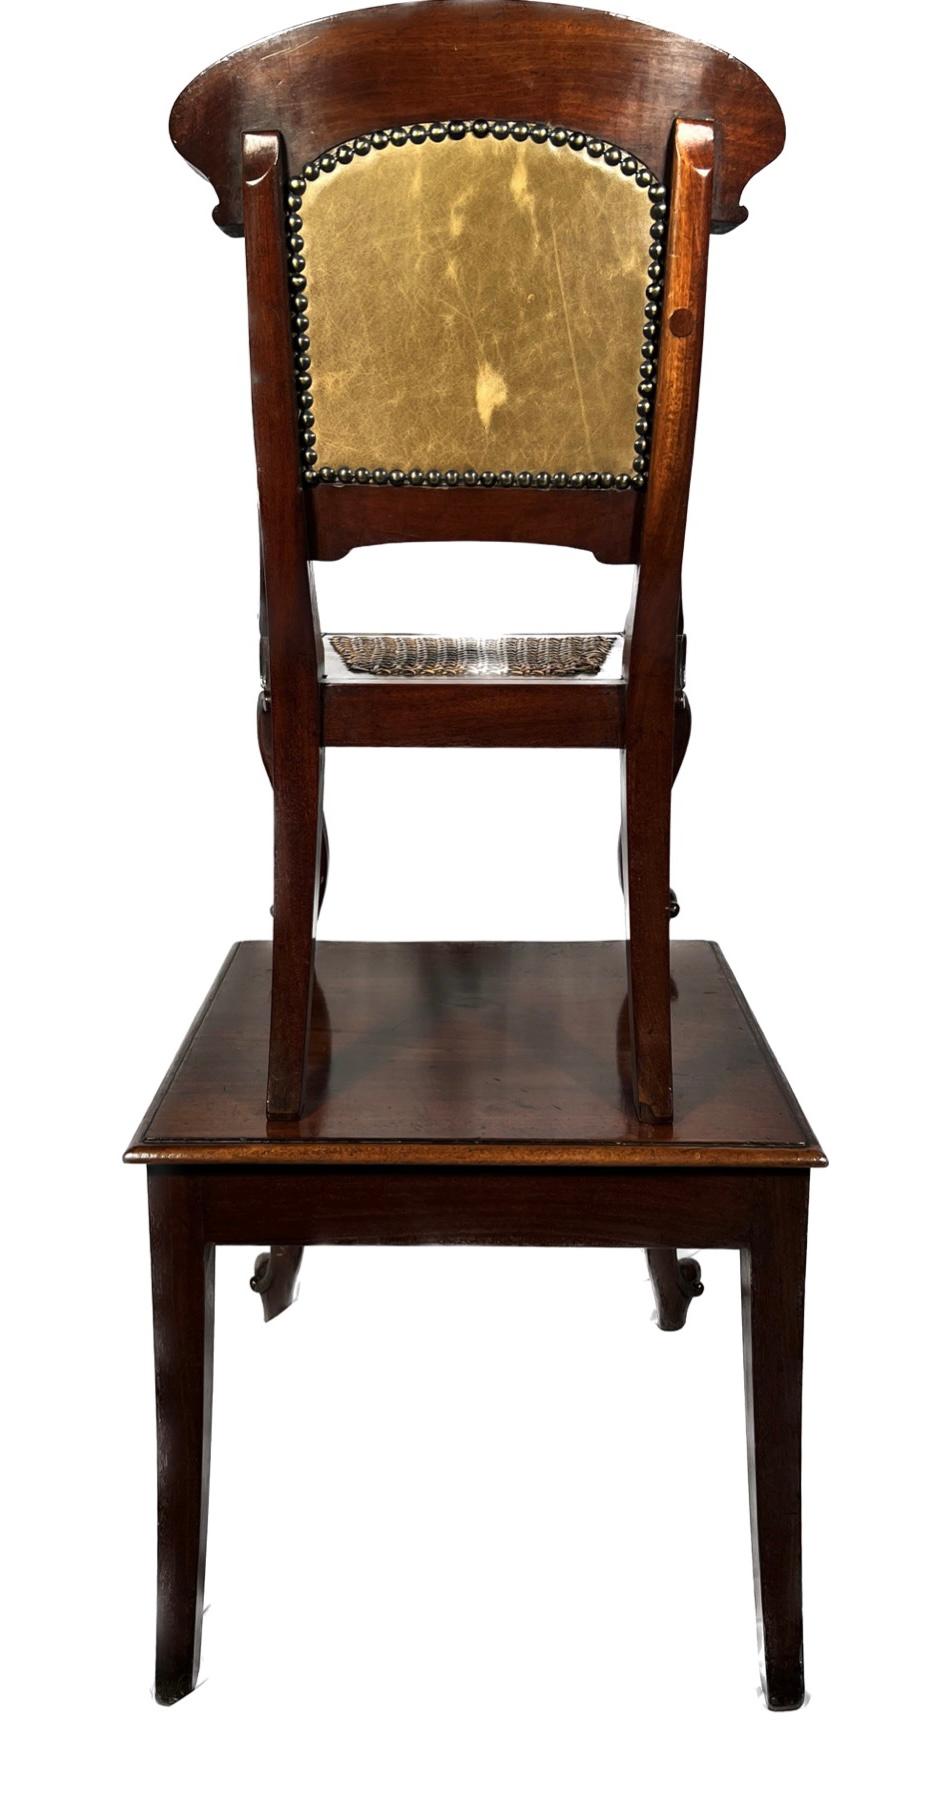 Mahogany Antique English Victorian Child's Chair circa 1860 For Sale